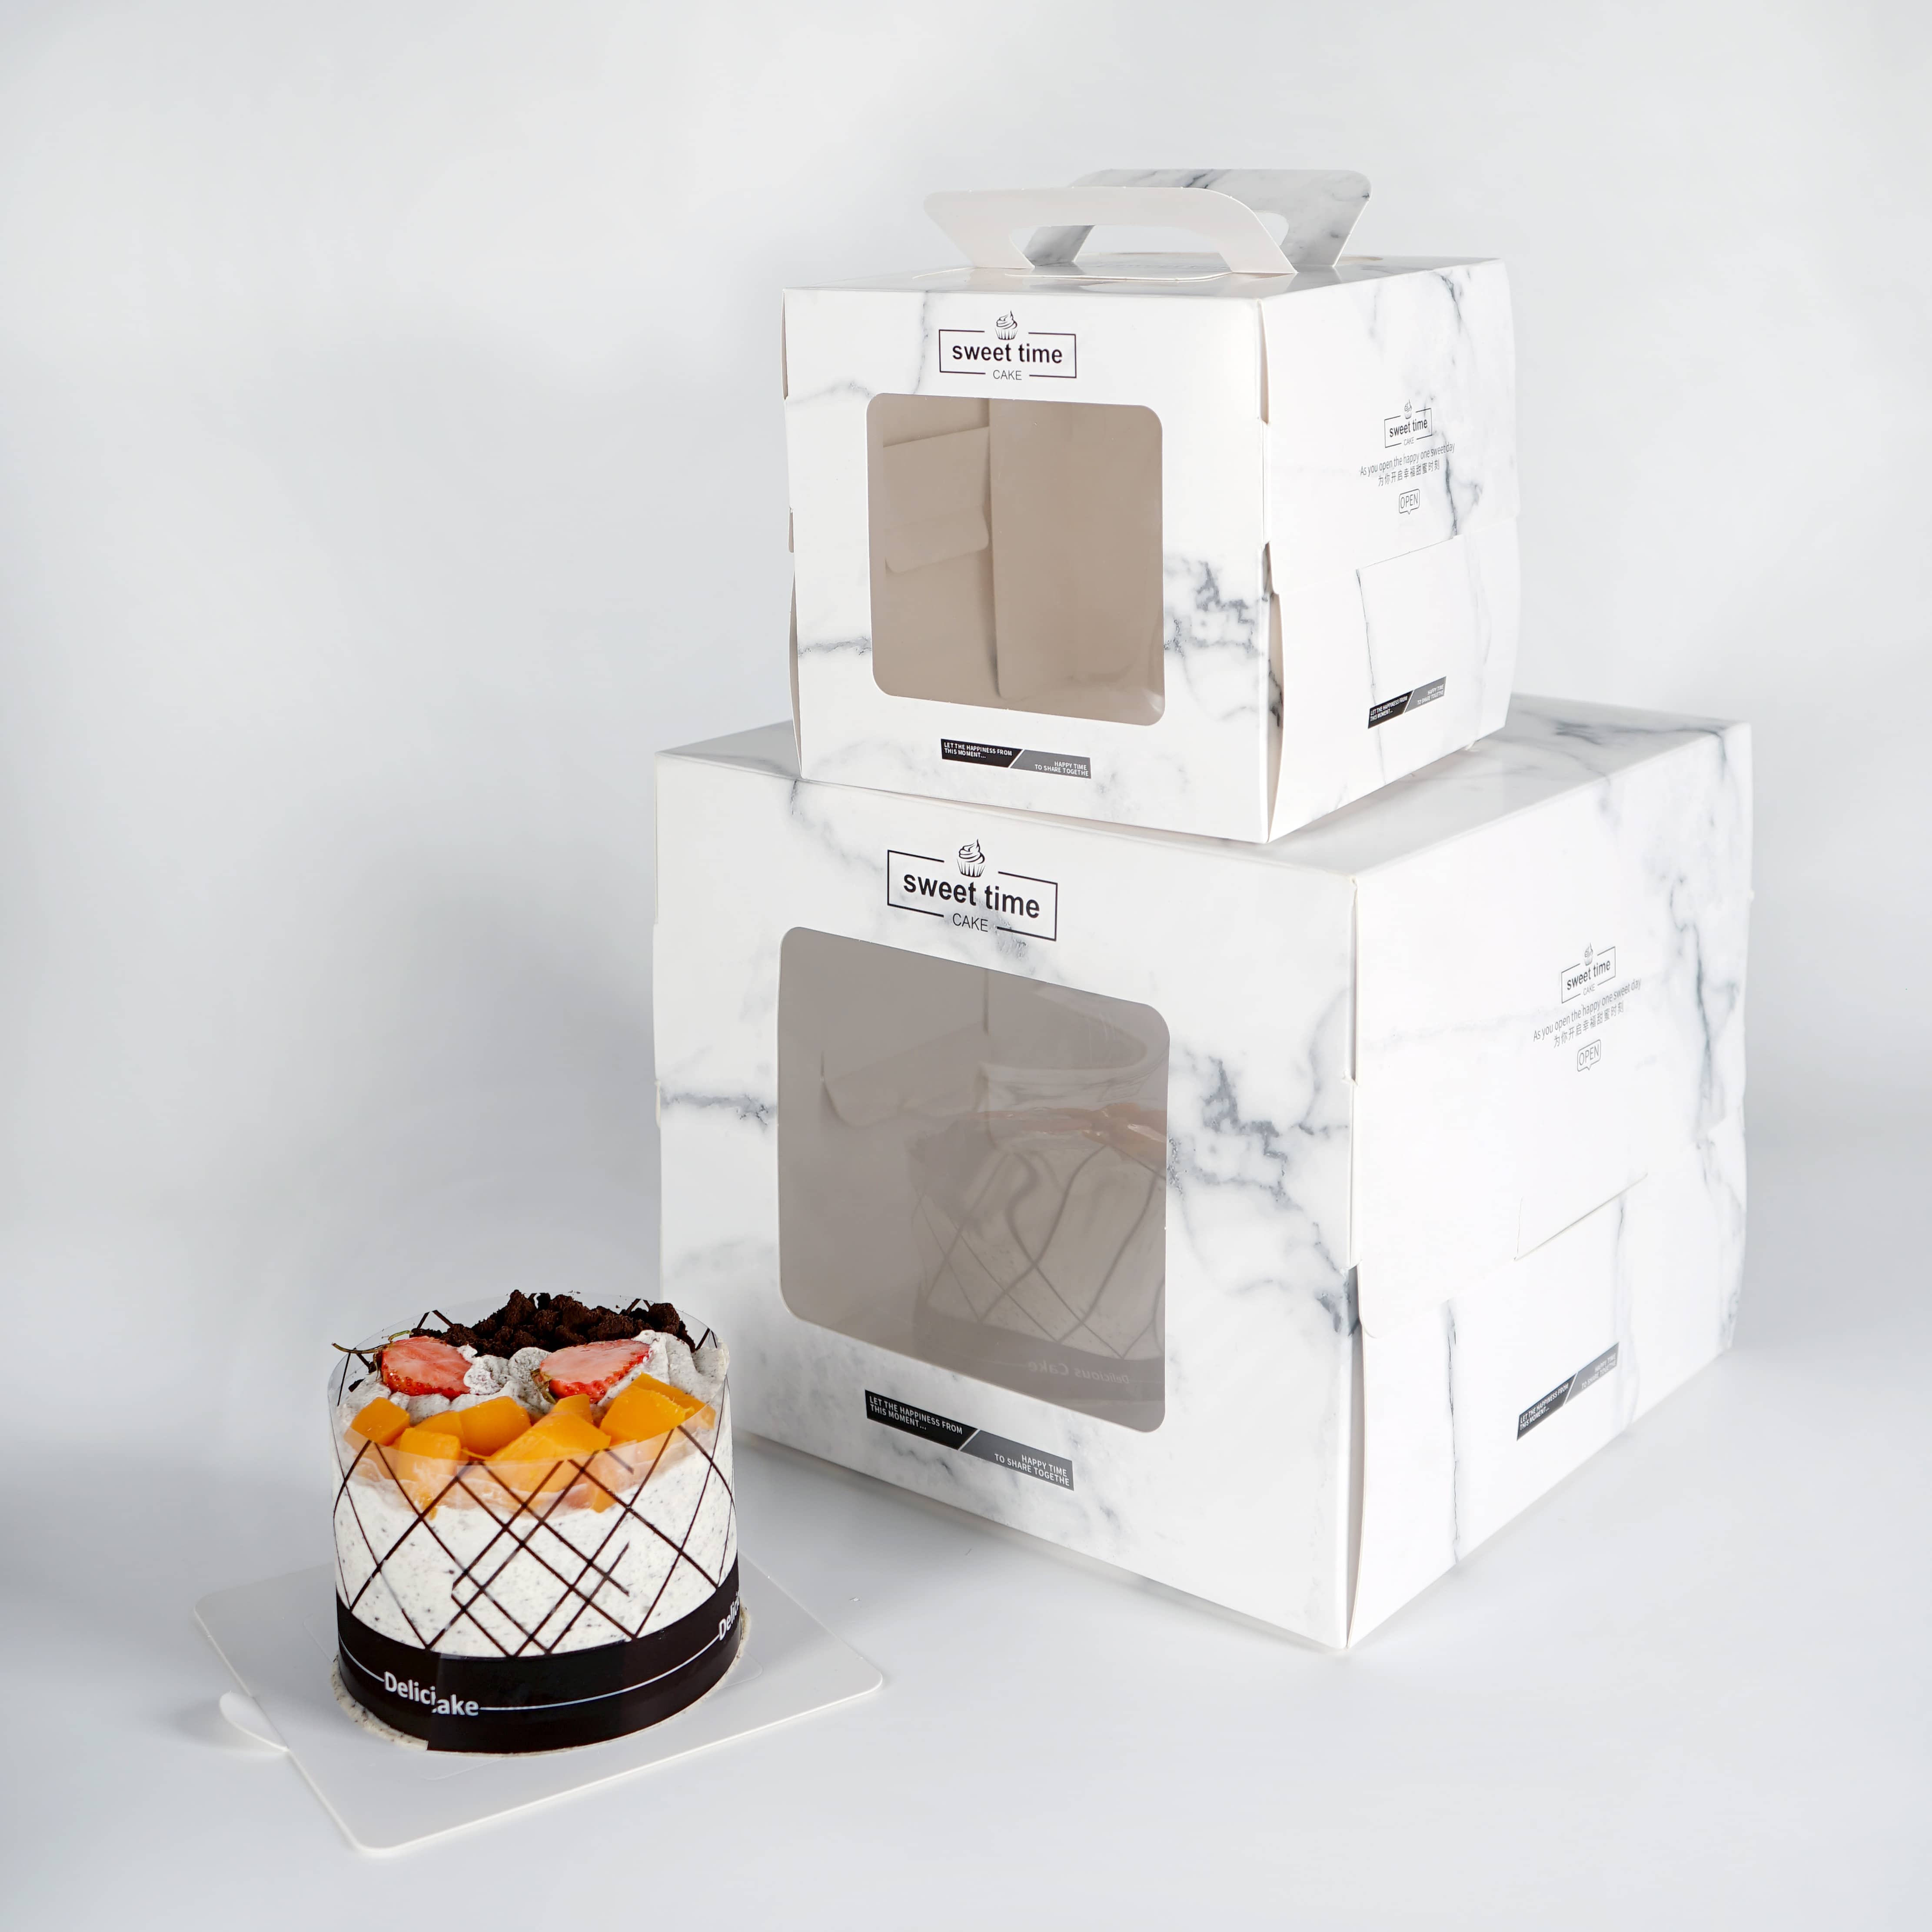 Square Advanced Technology Marble Carrier Bags Paper Cake Box nga May Bintana